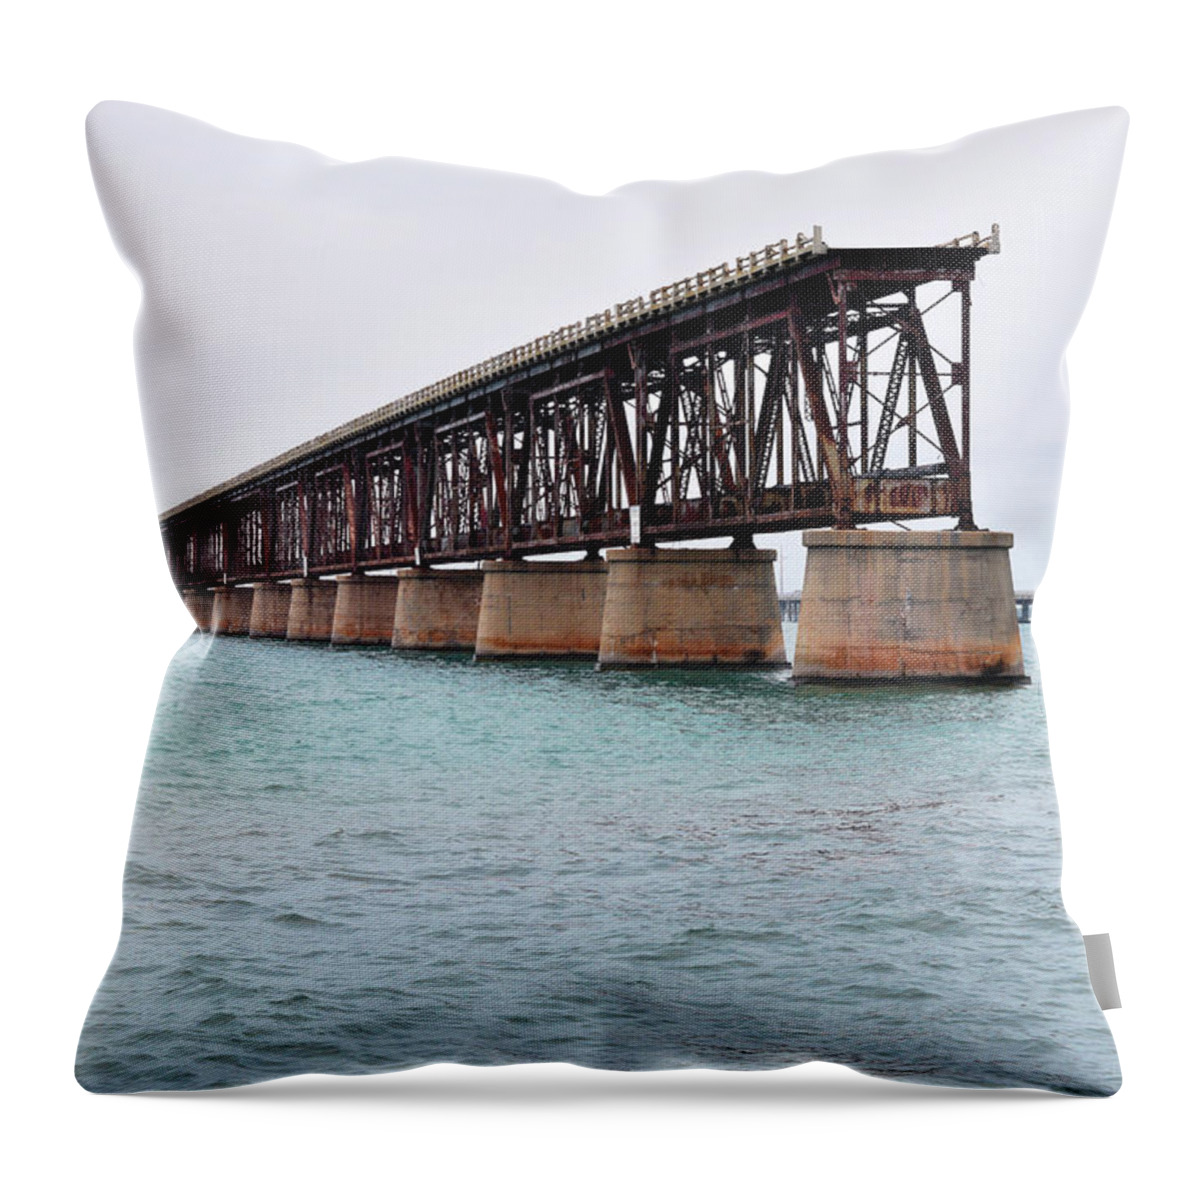 Pat Turner Throw Pillow featuring the photograph Bahia Honda Bridge by Pat Turner